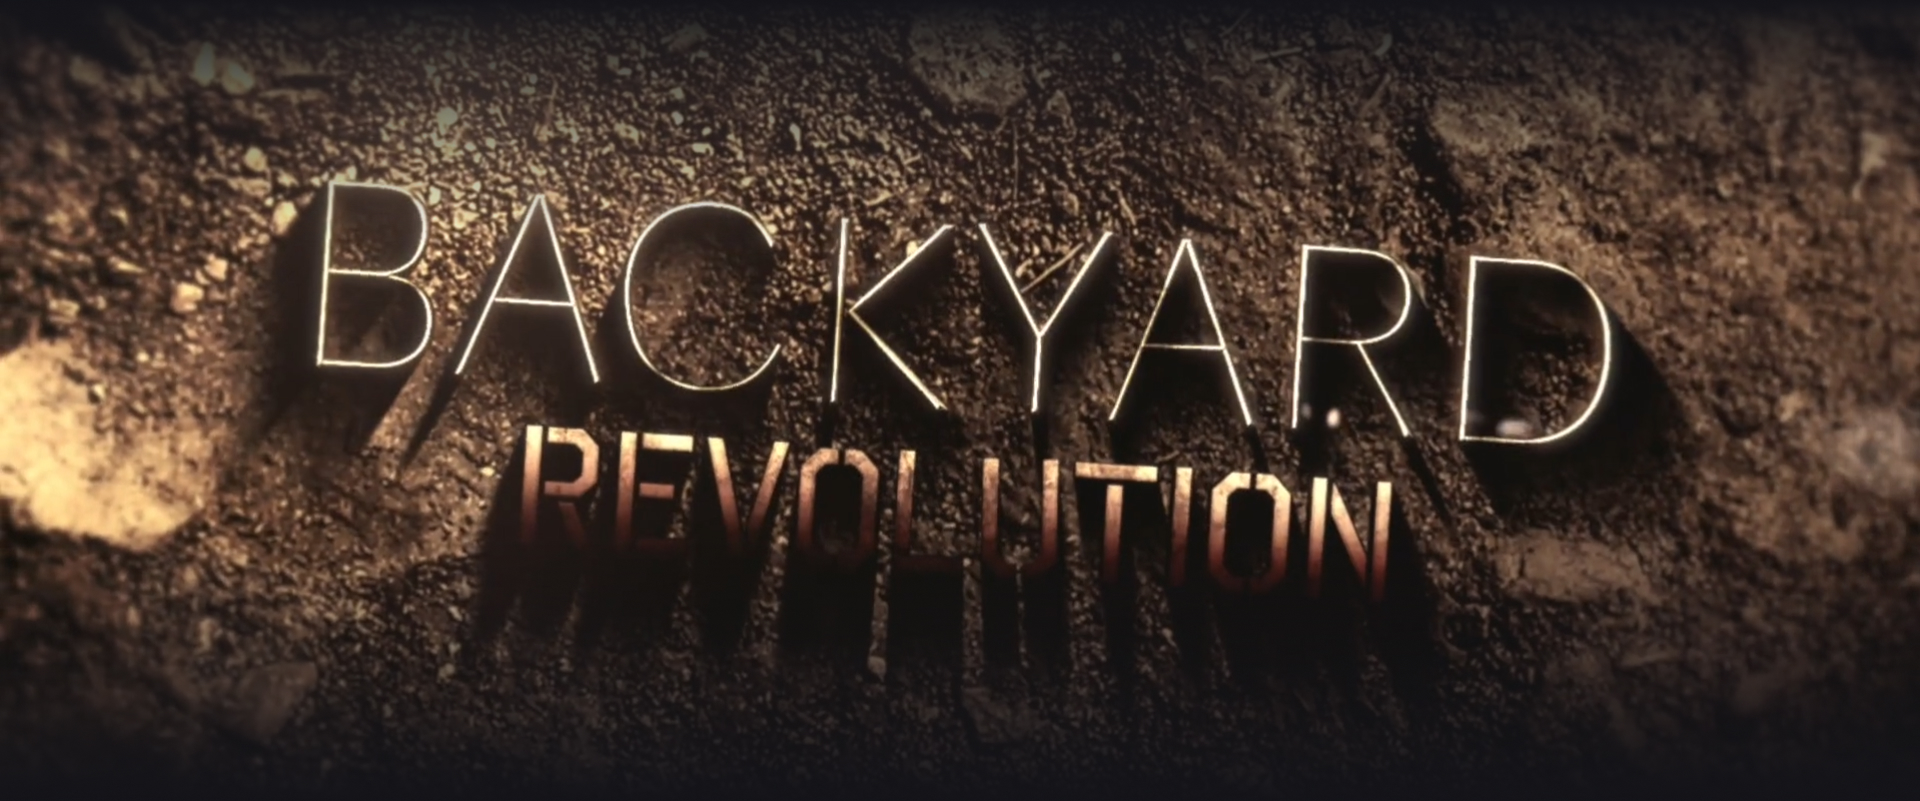 backyard revolution video